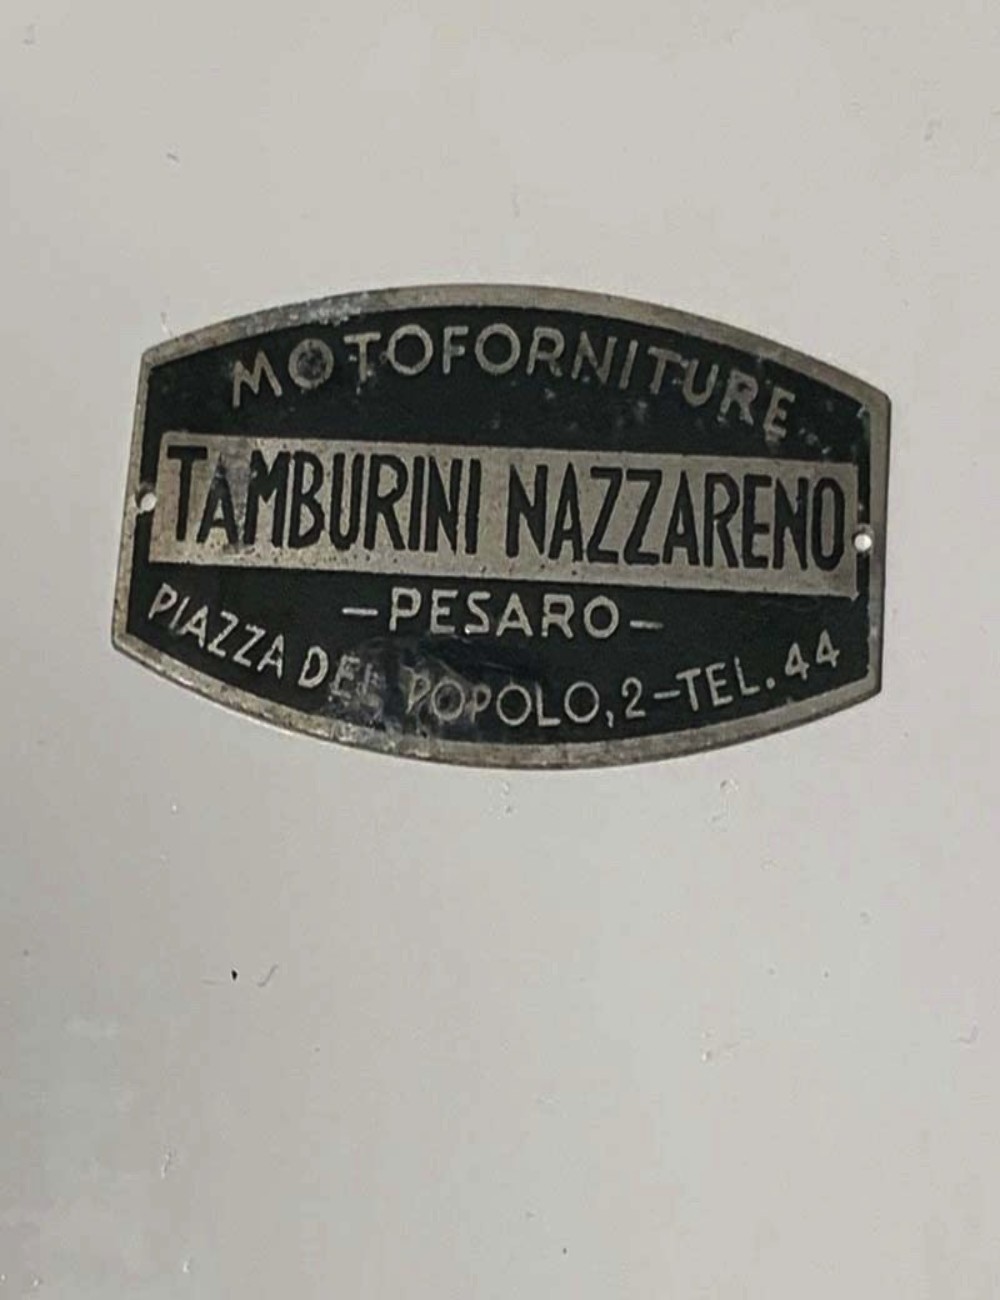 Tamburini Nazzareno dealer plate